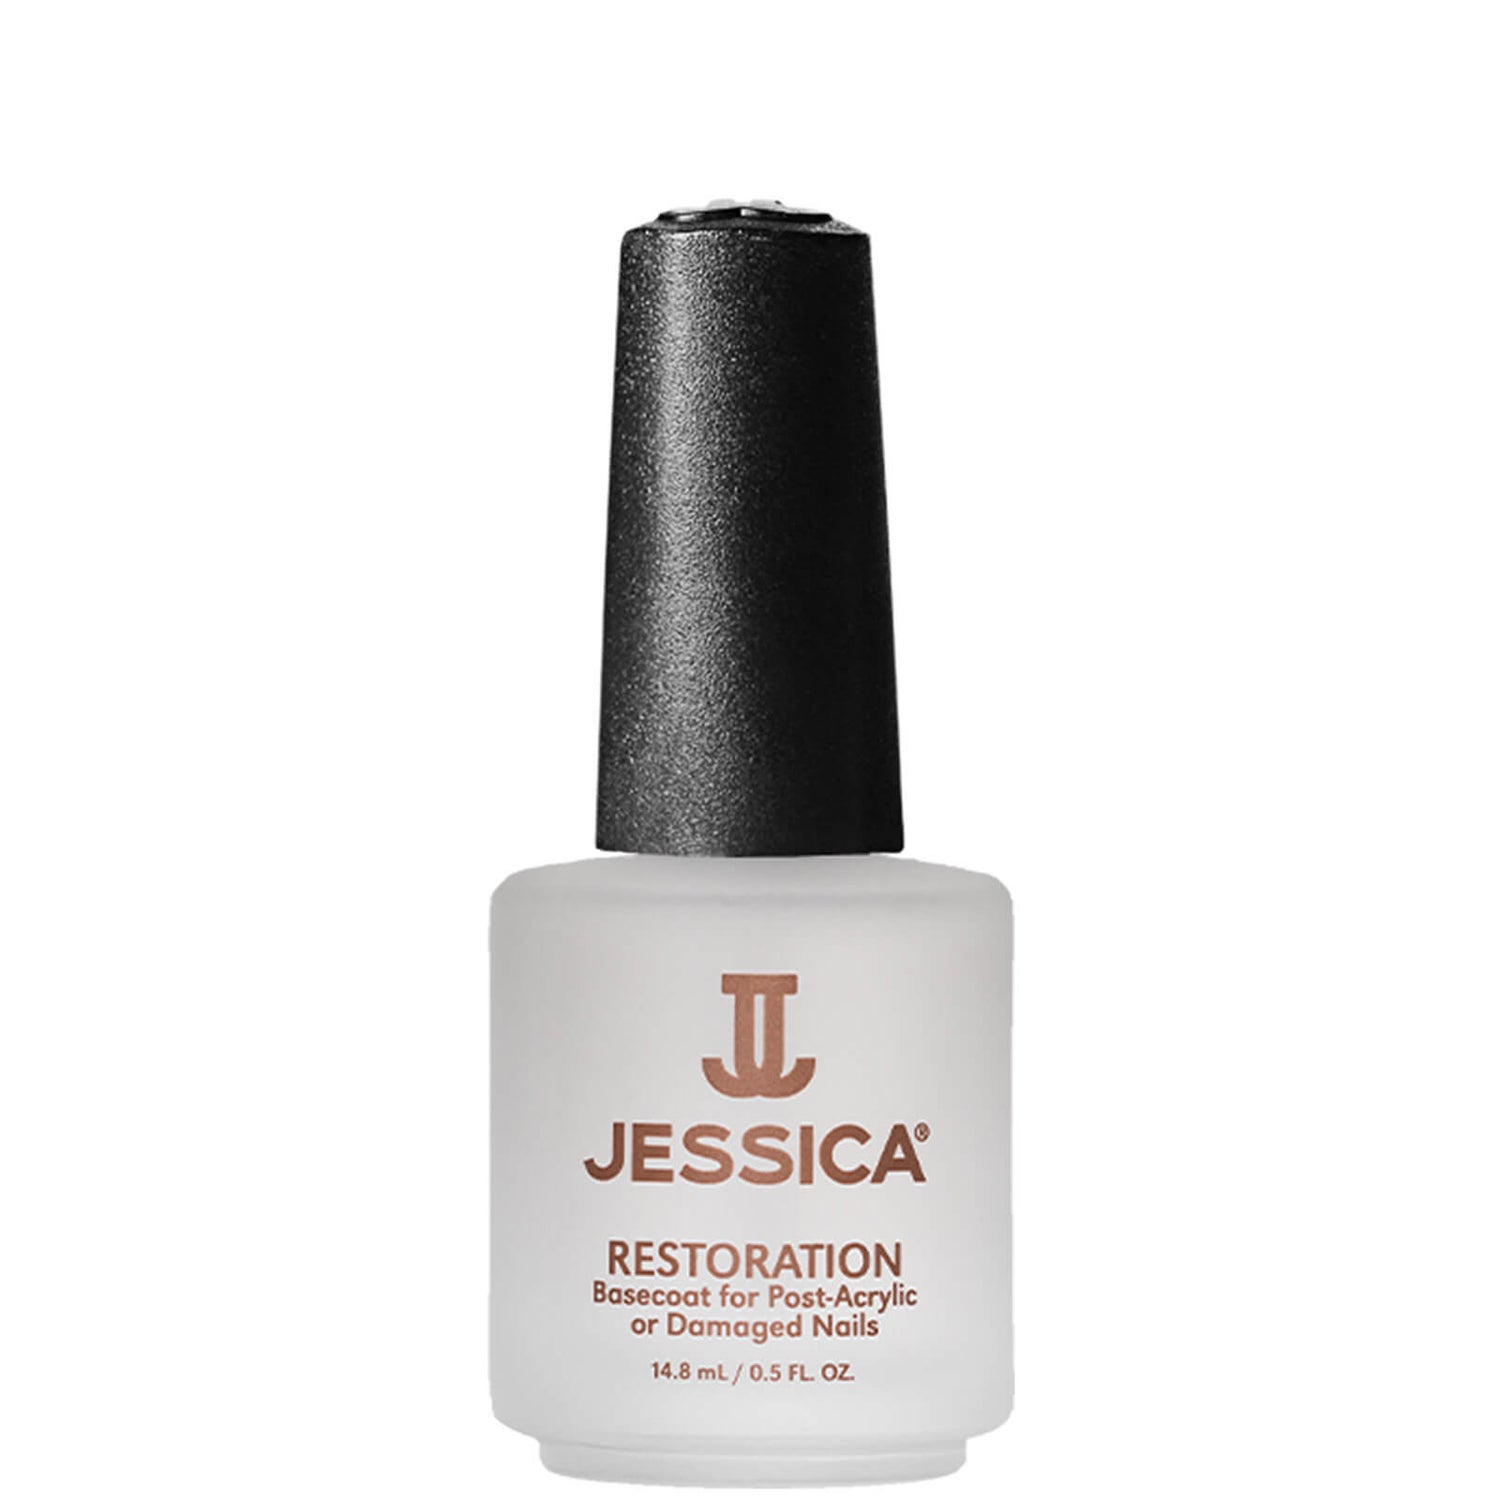 Base Reparadora Restoration Basecoat For Post-Acrylic/Damaged Nails da Jessica (14,8 ml)